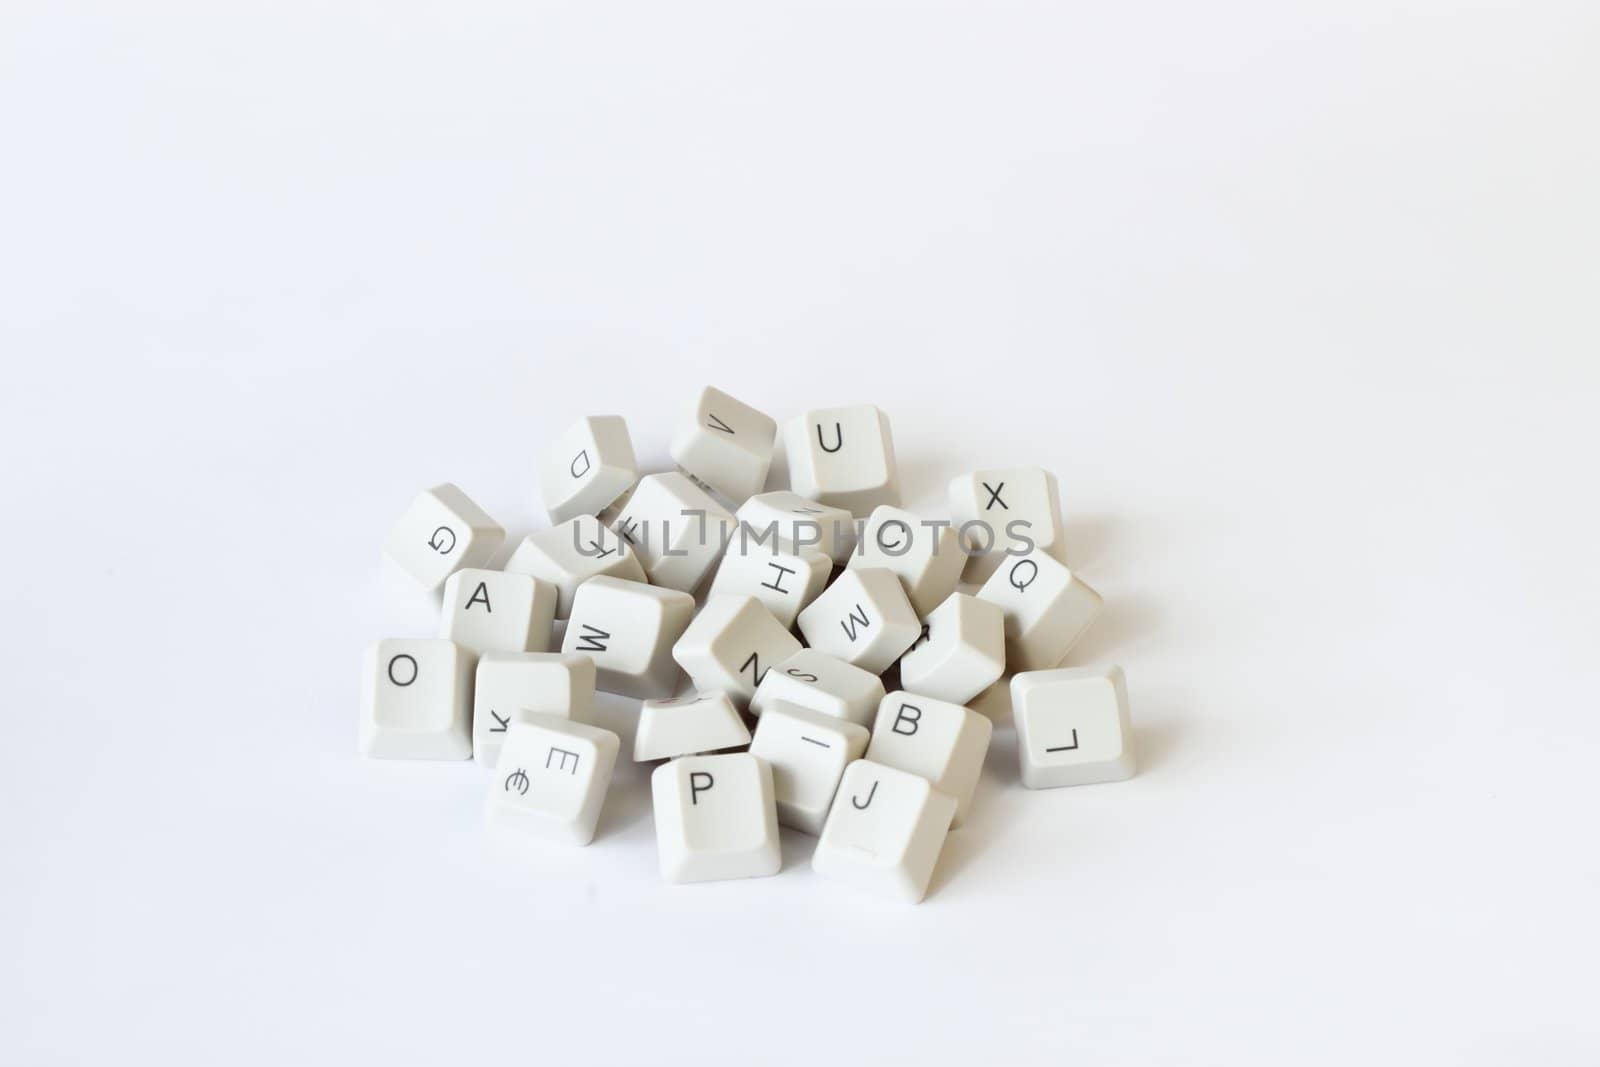 scattered keyboard keys on white  by artush